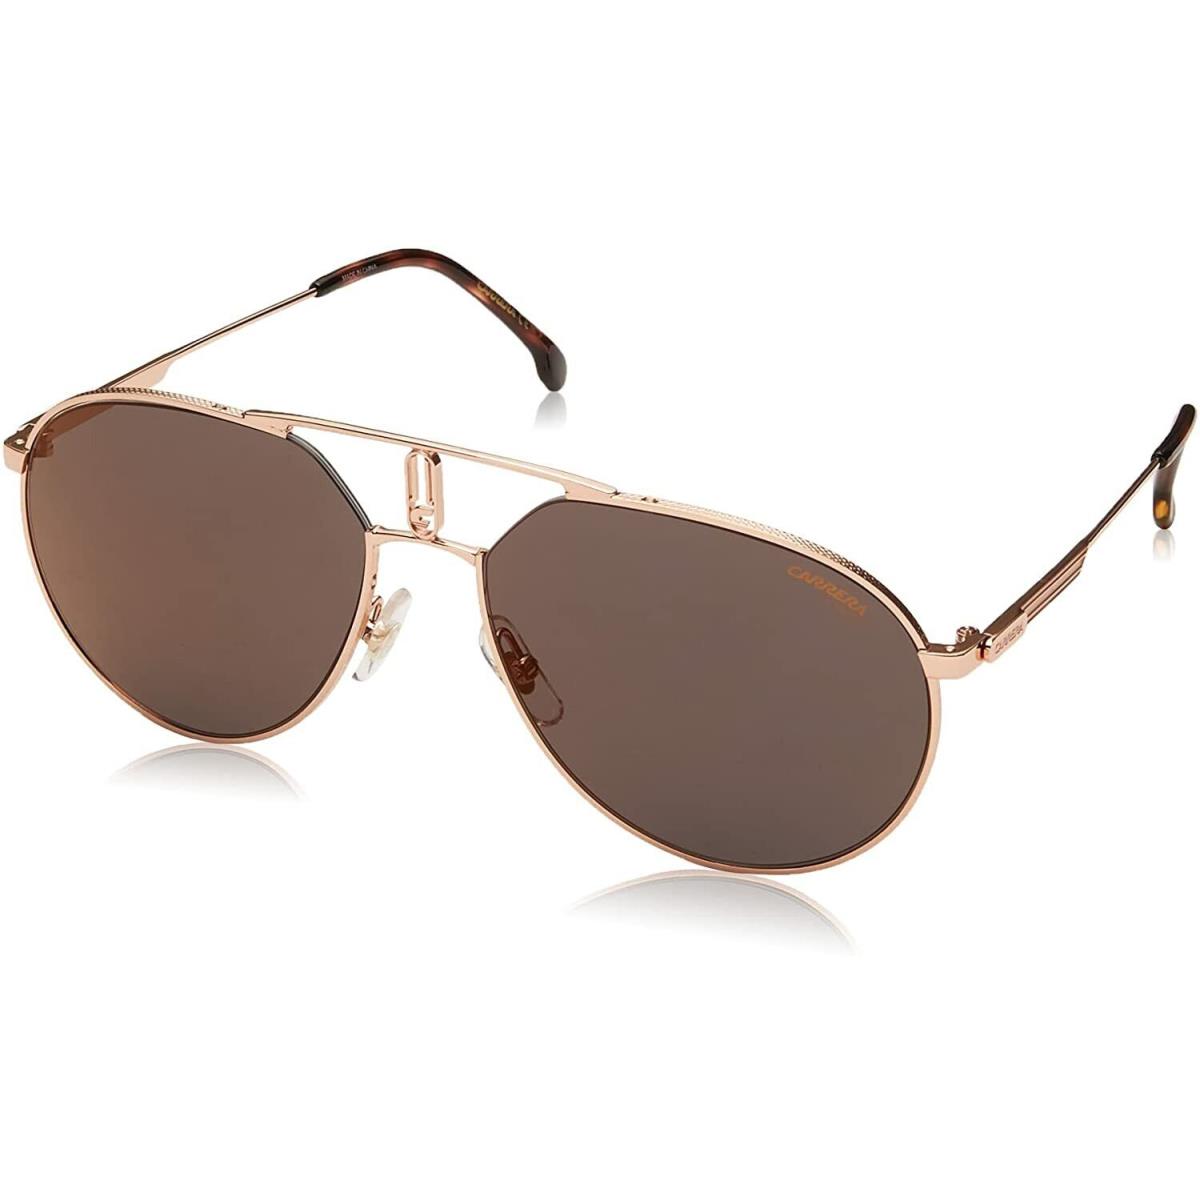 Carrera Sunglasses 1025/S 0DDB JO Gold Copper Black/ Grey Gold Mirror Lens